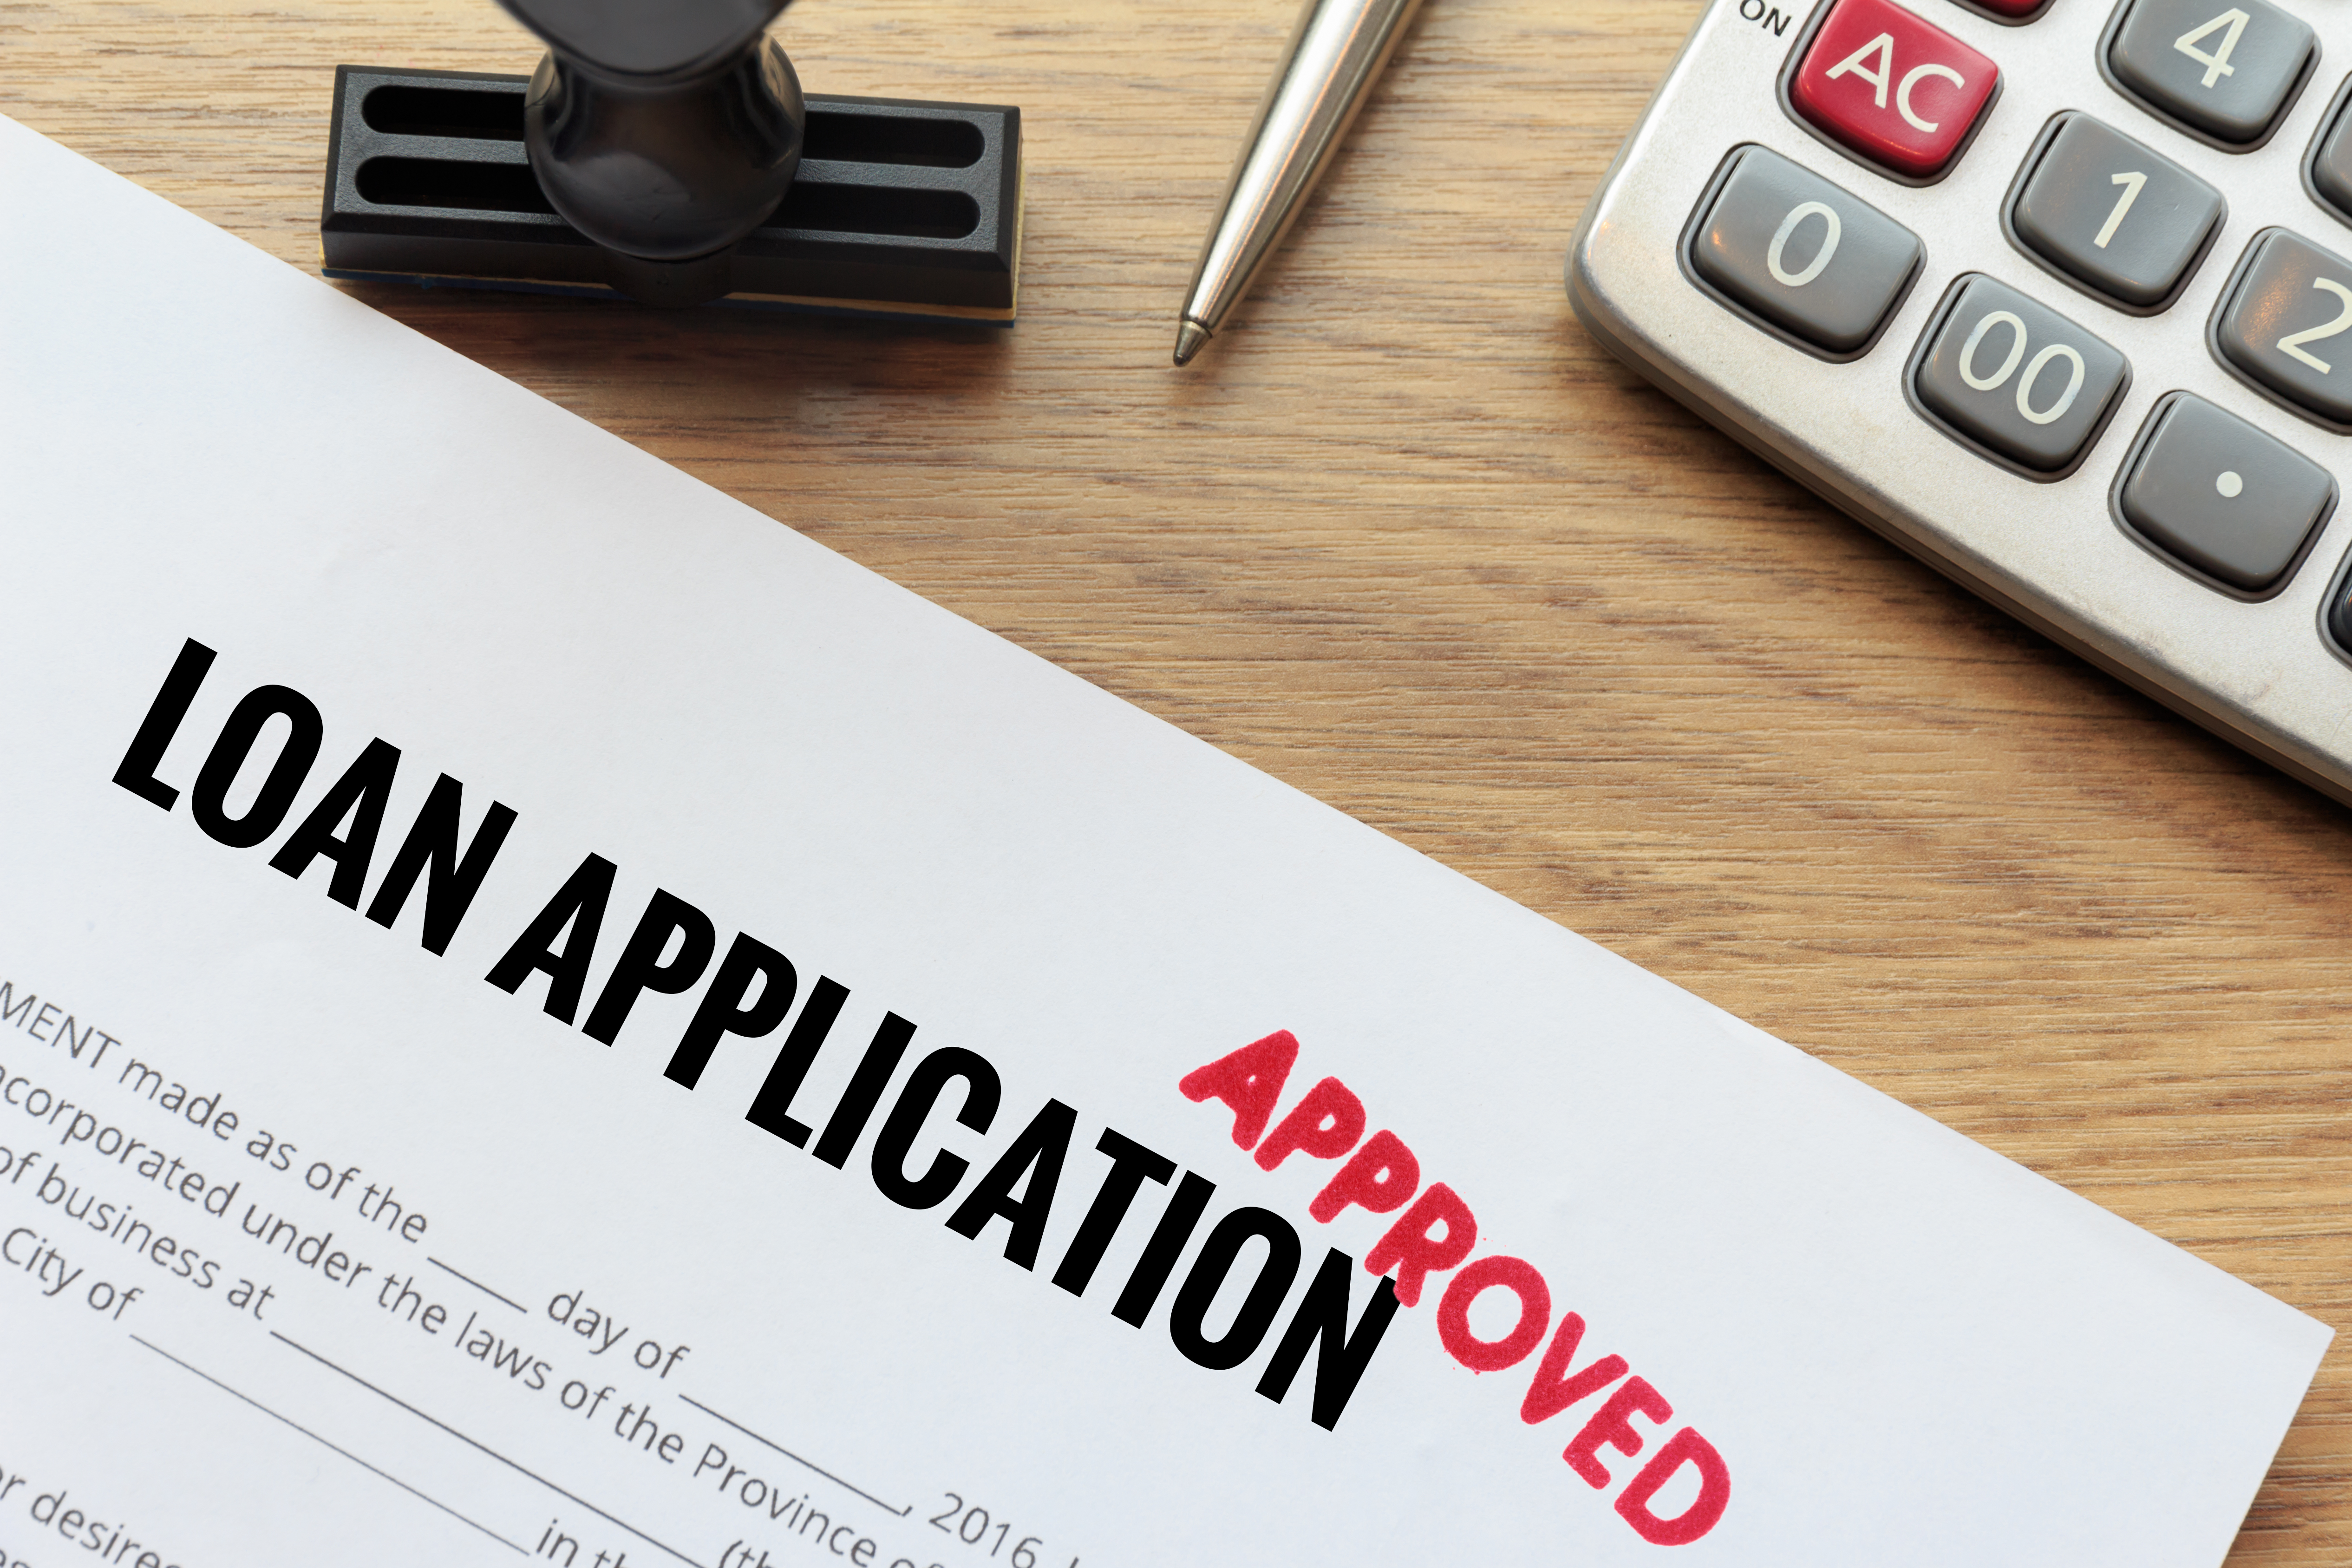 Member Notice: Loan Applications